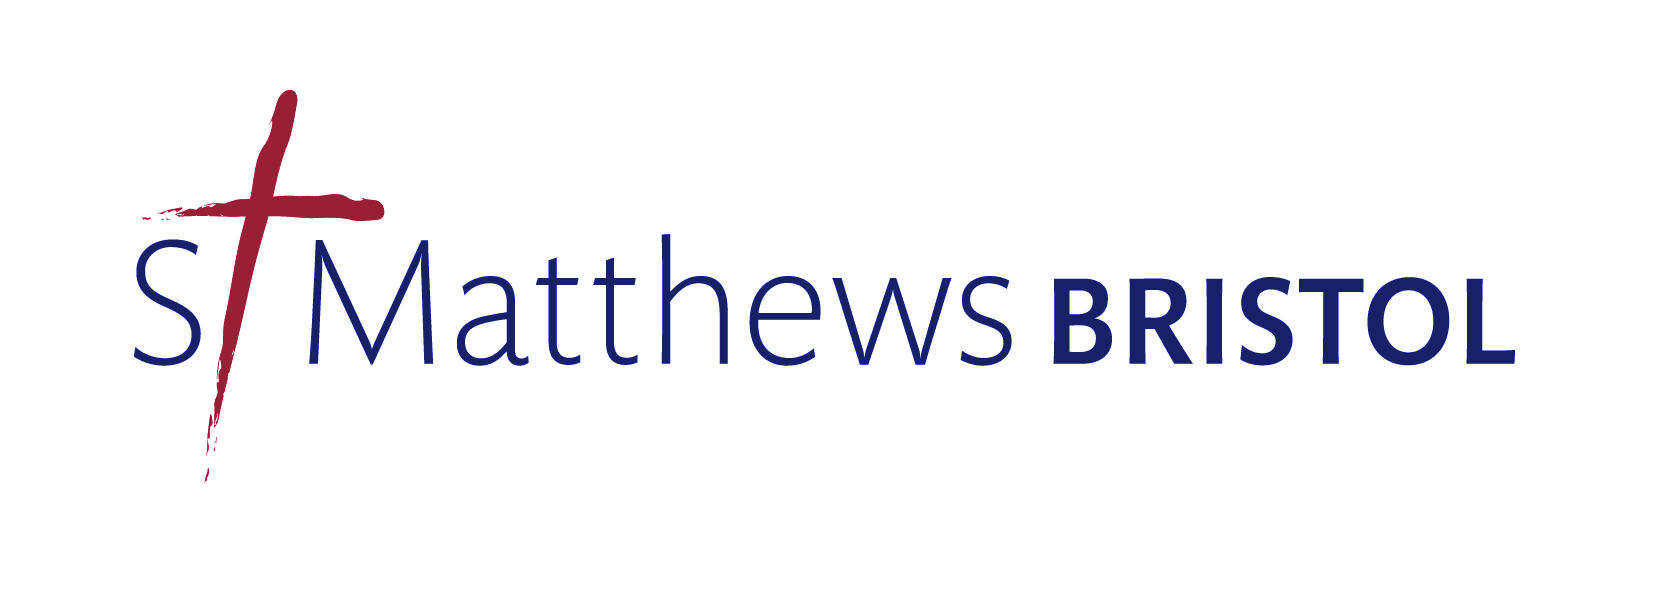 st matthews church bristol logo